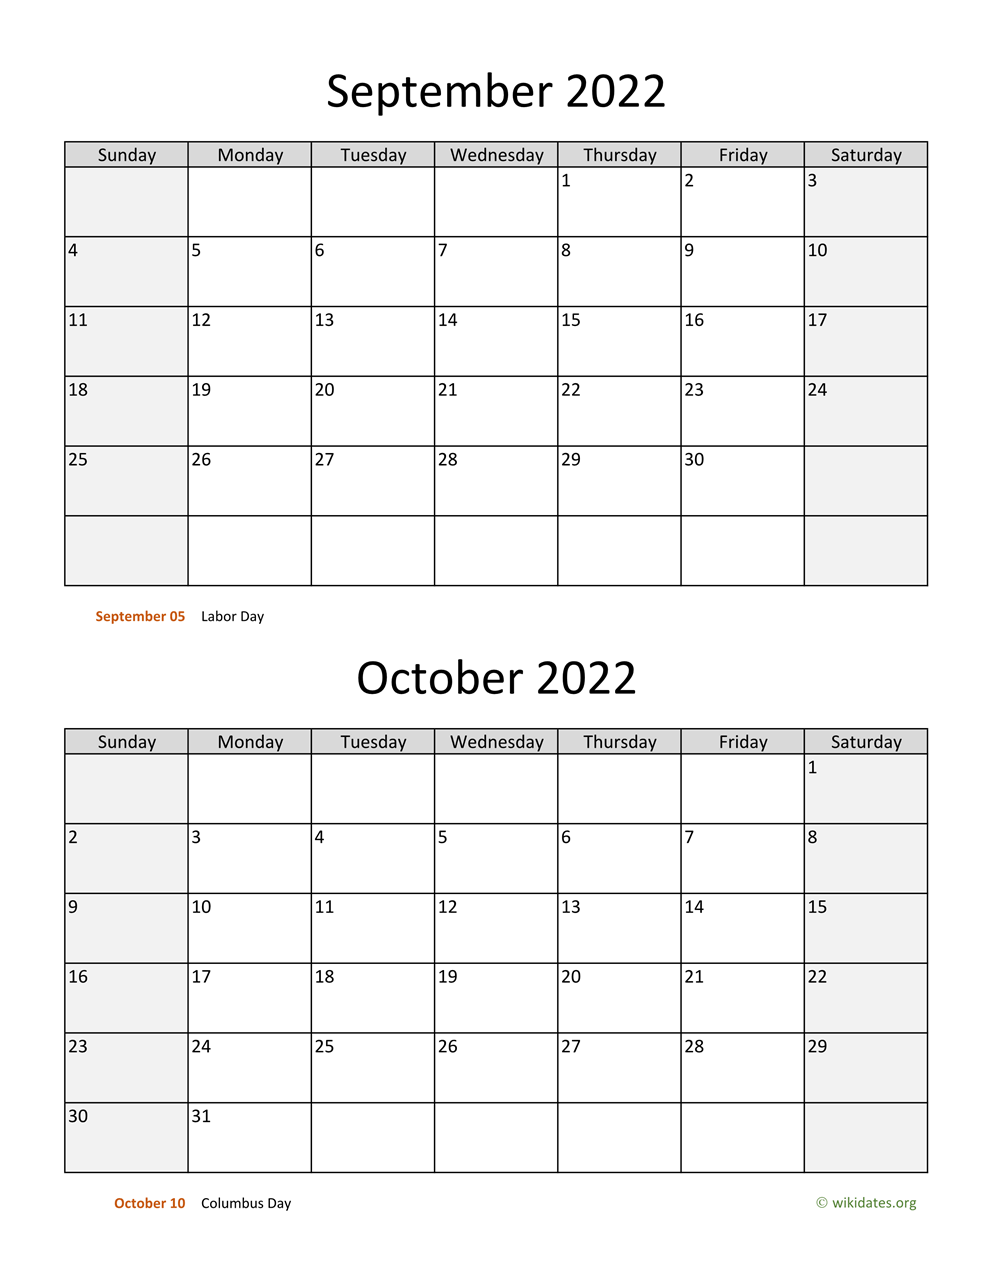 September 2022 Calendar September And October 2022 Calendar | Wikidates.org